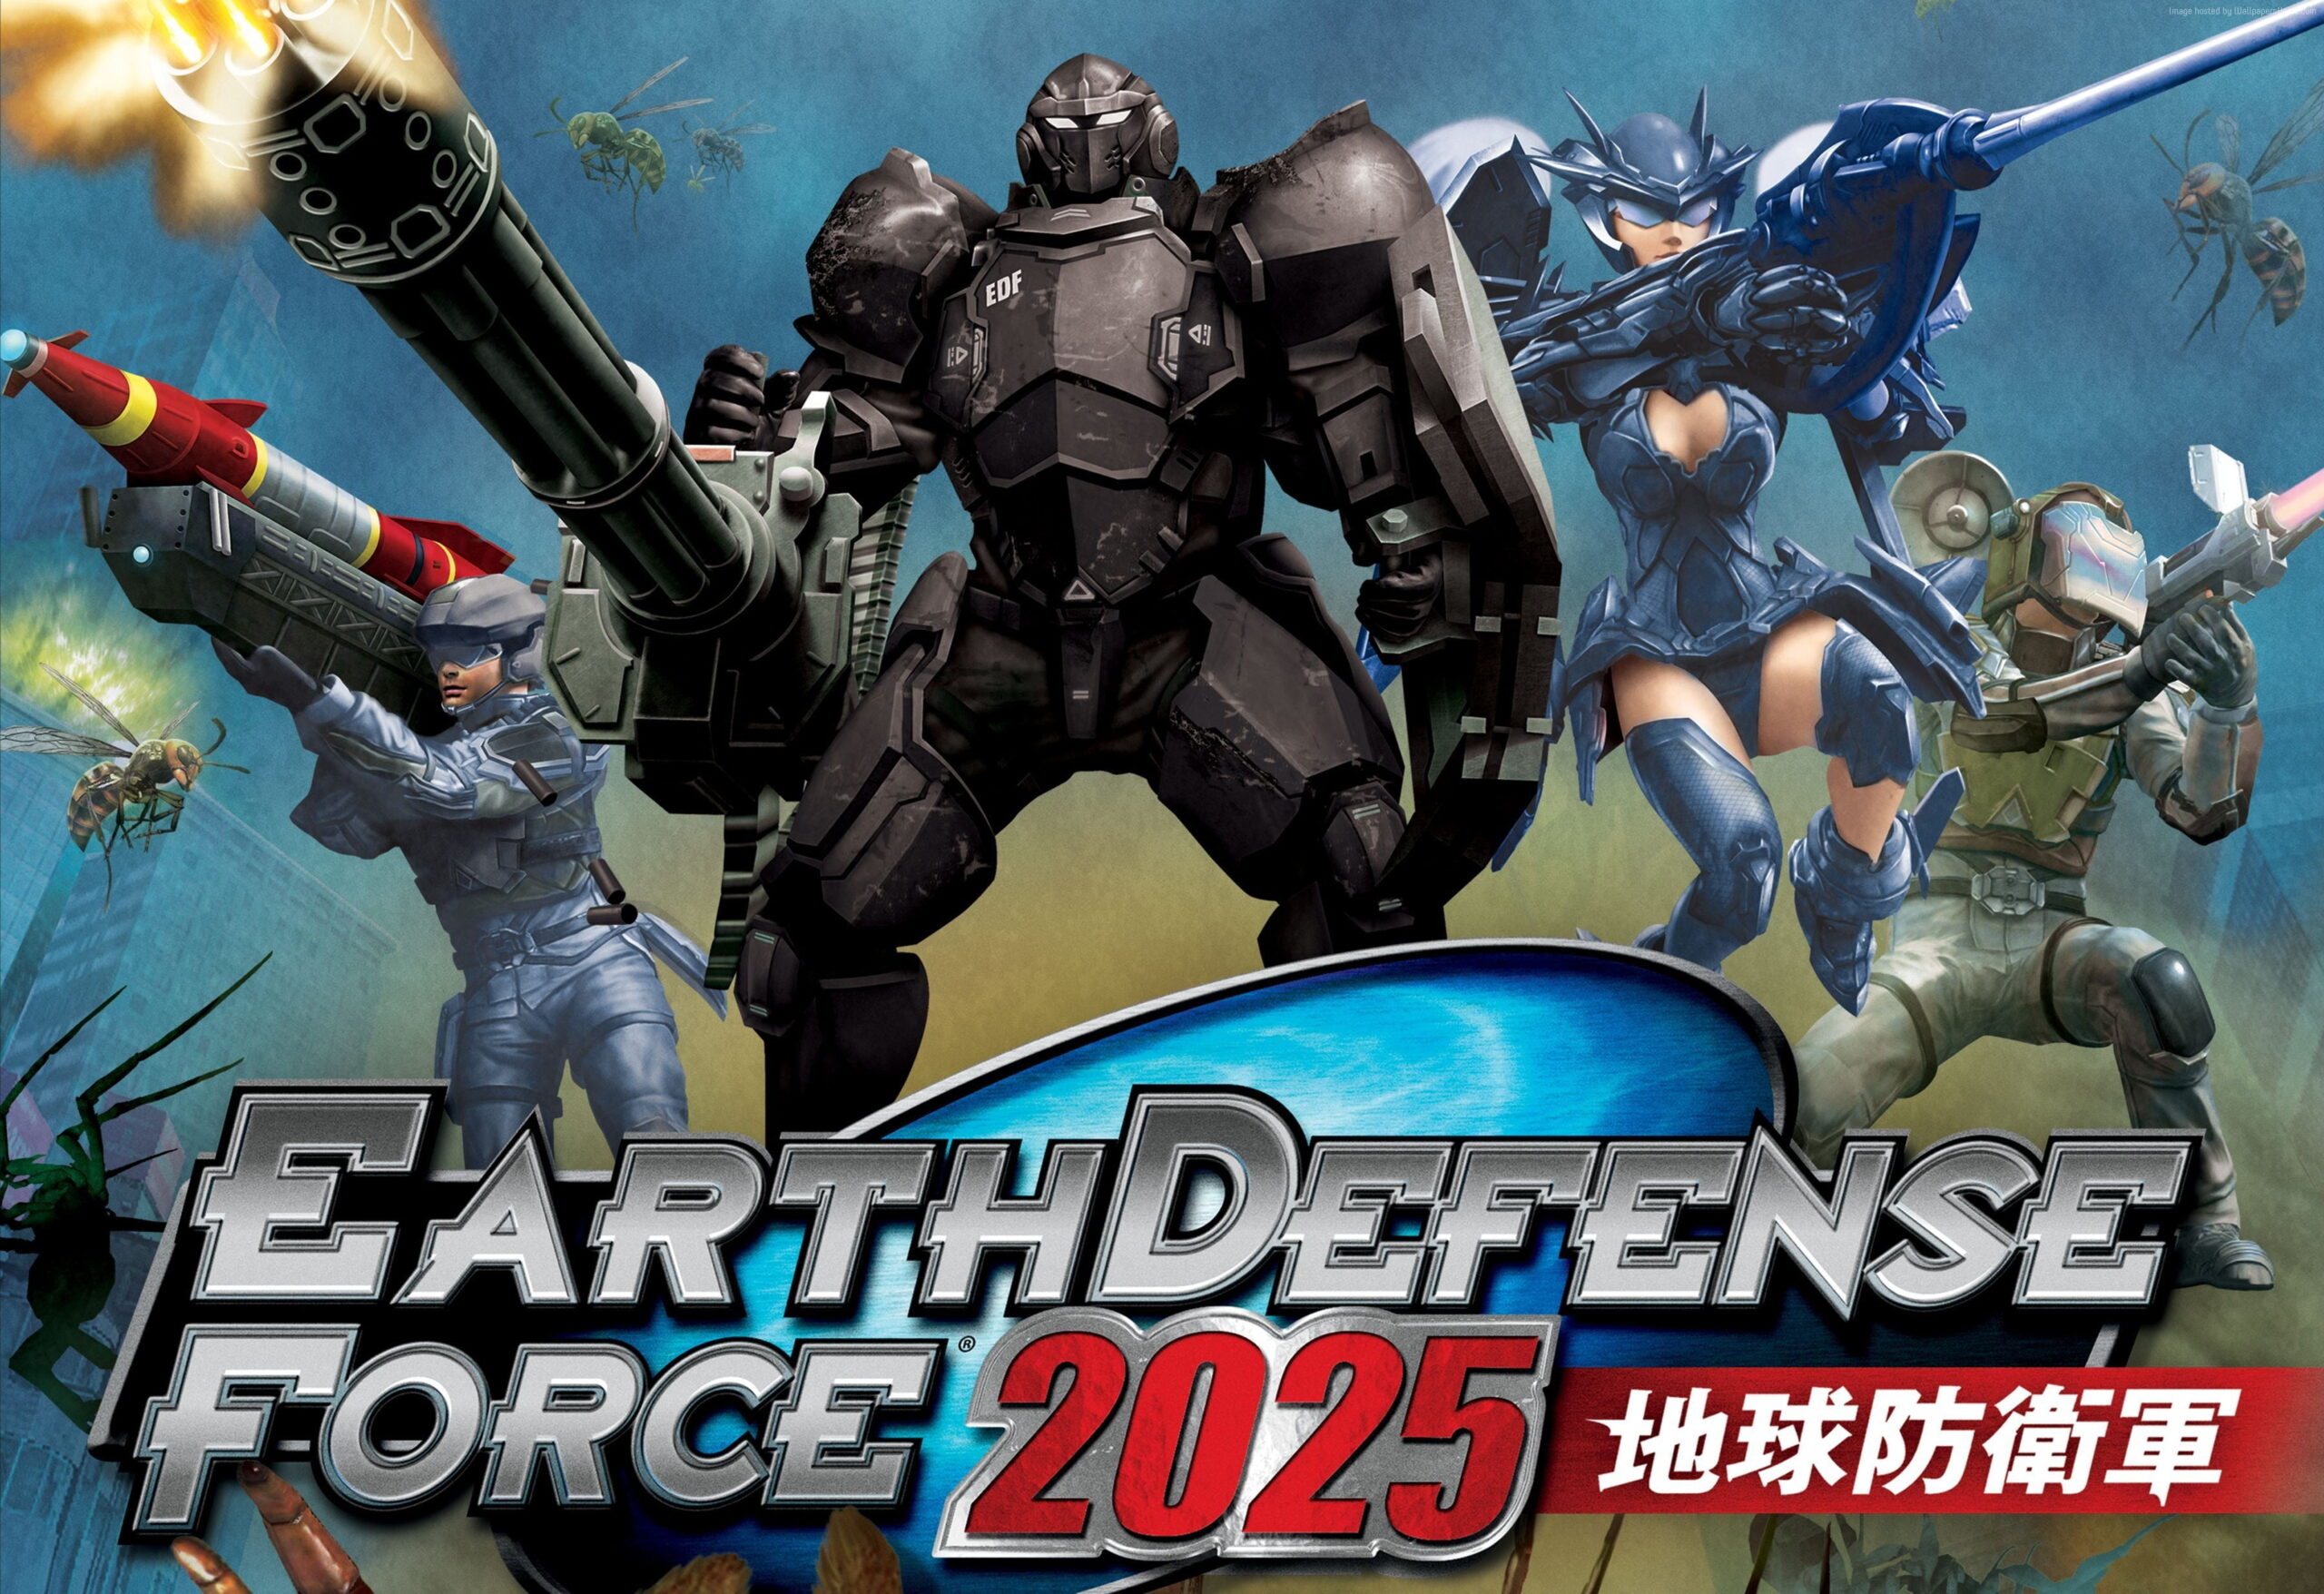 X35 Earthwalker Earth Defence Force 2025 